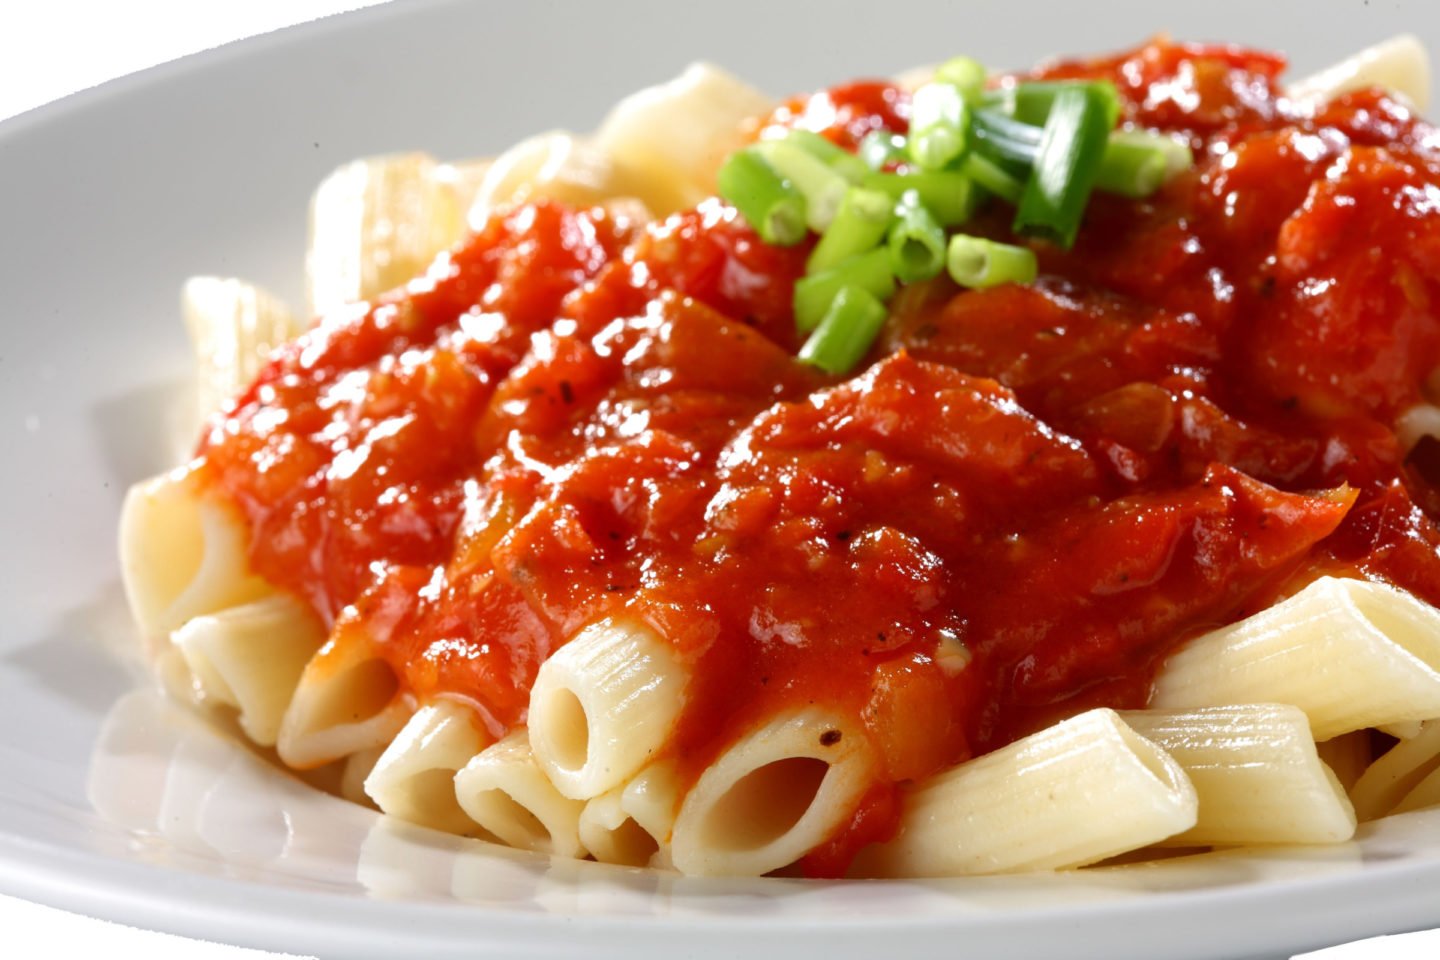 ziti pasta with tomato sauce